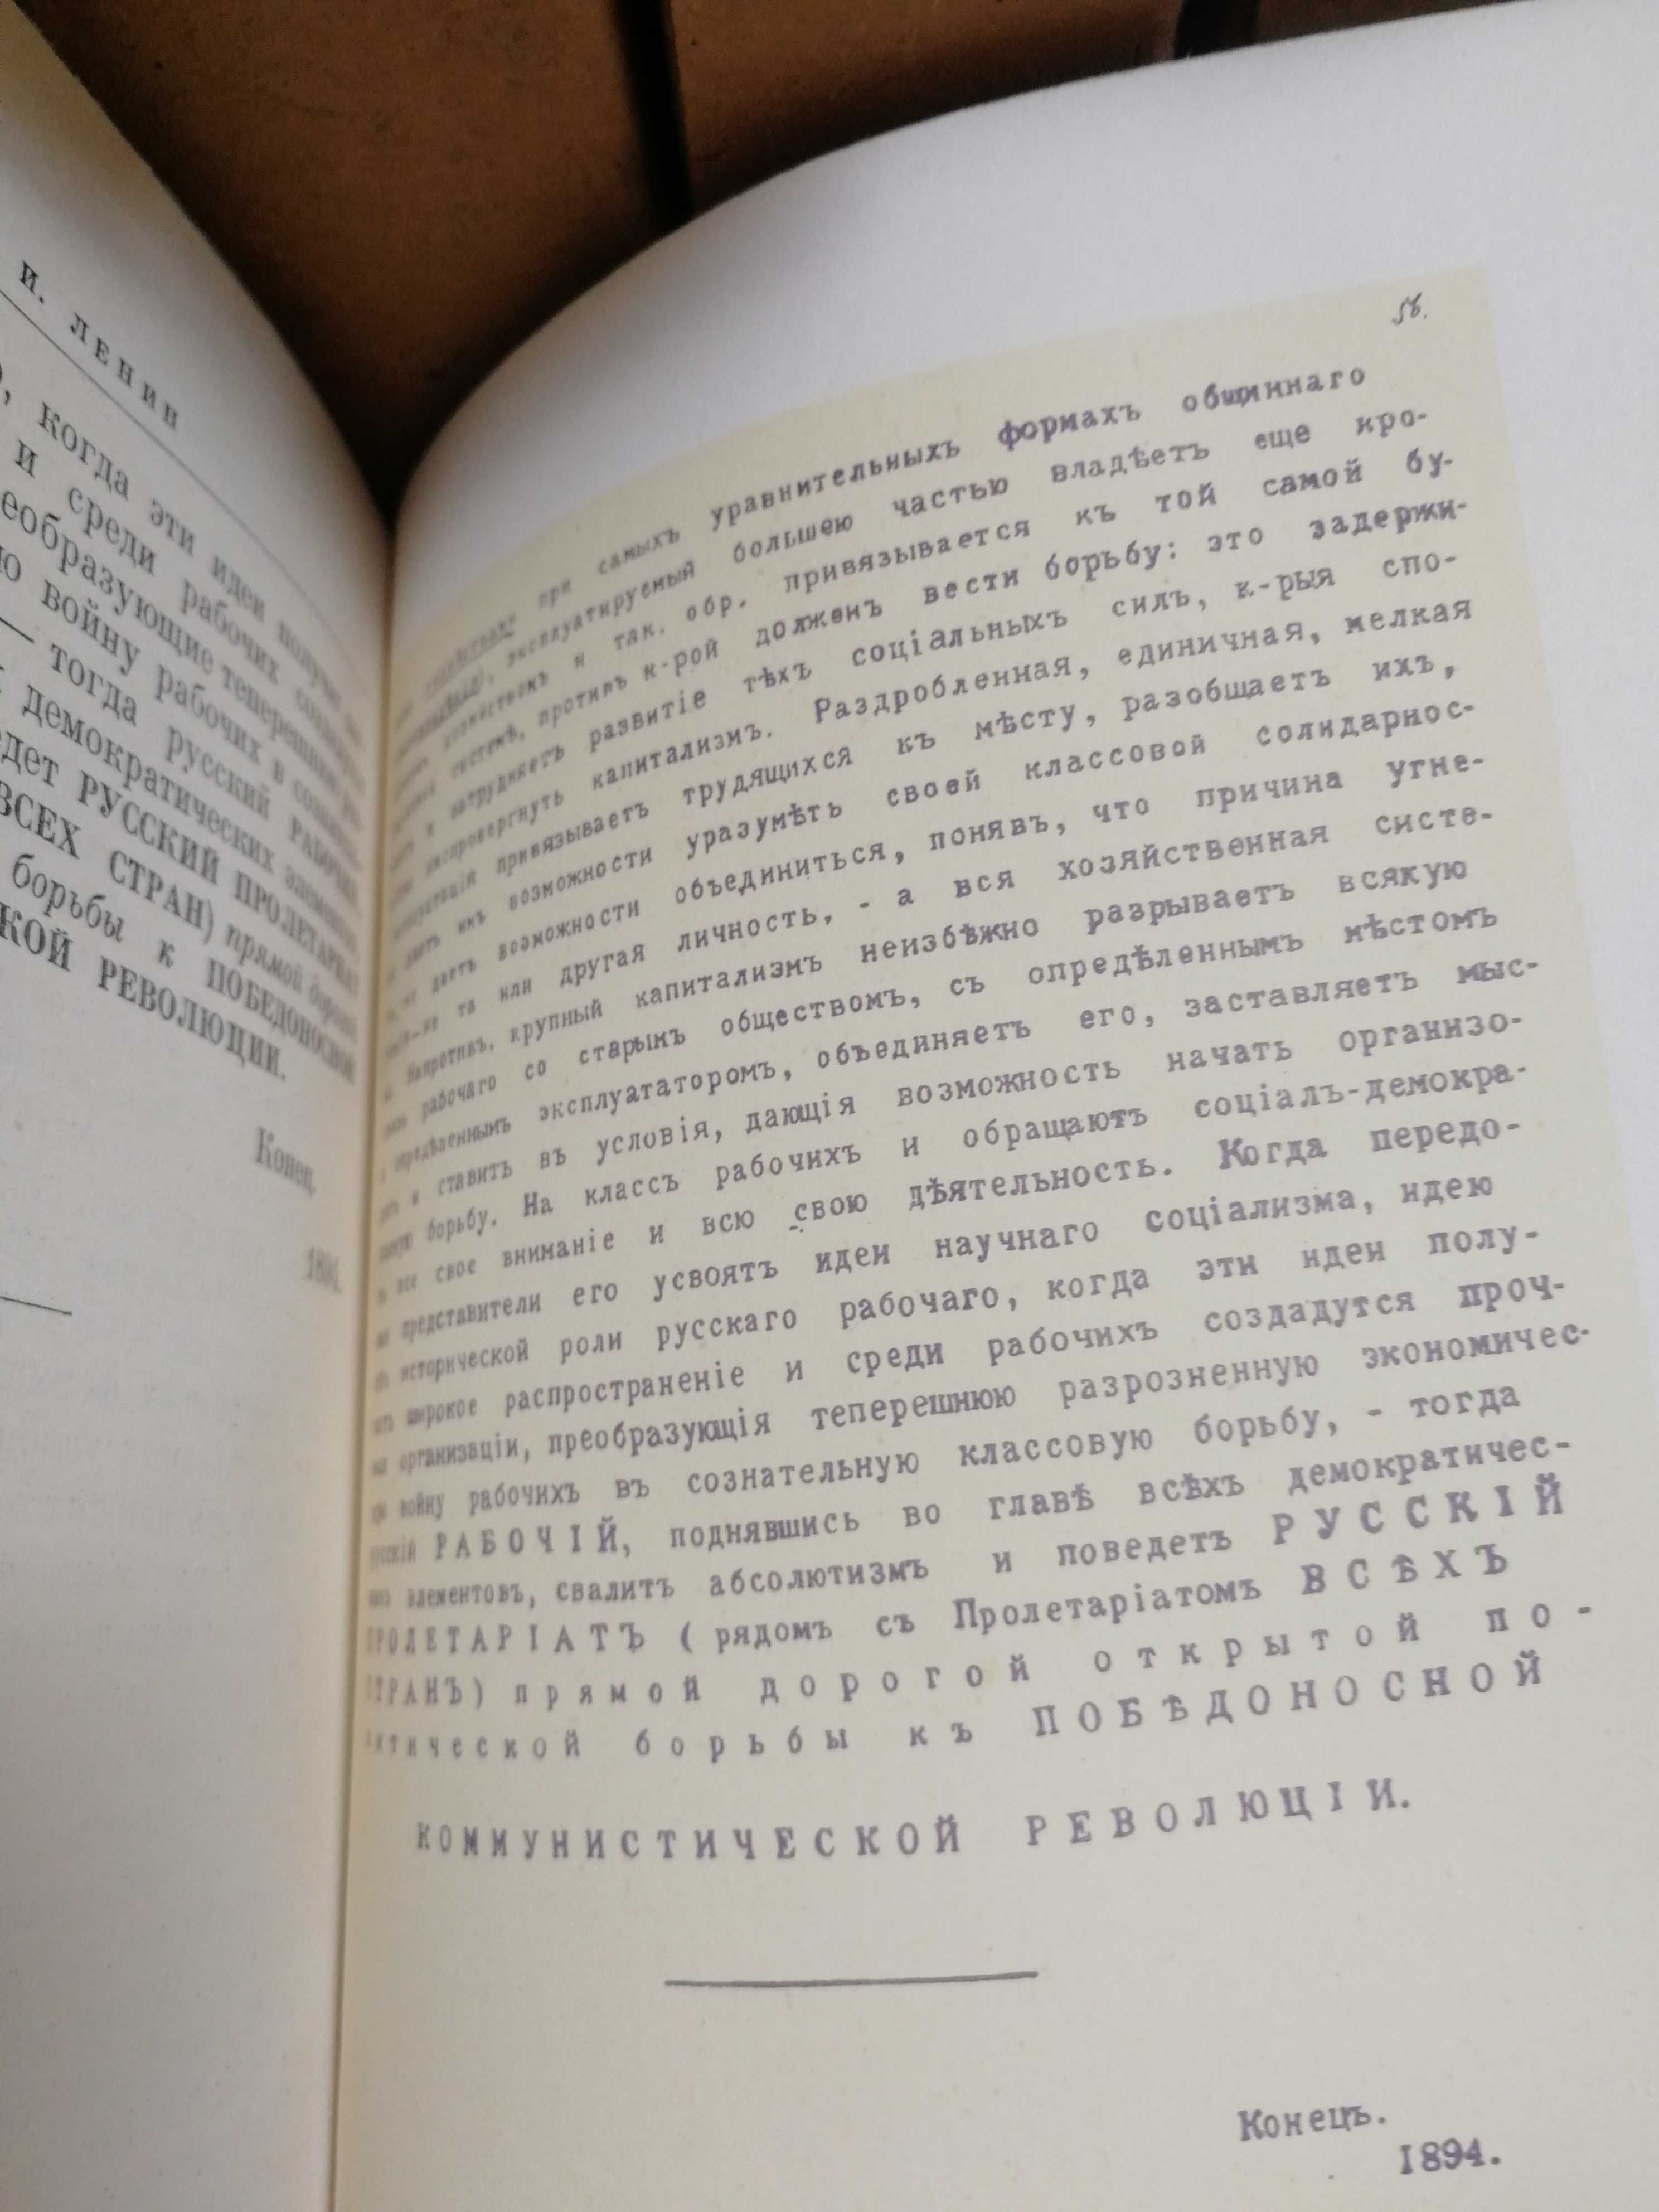 Ленин. Собрание сочинений. Некомплект 1,5,6,7,9,10 тома. 1958 год изд.